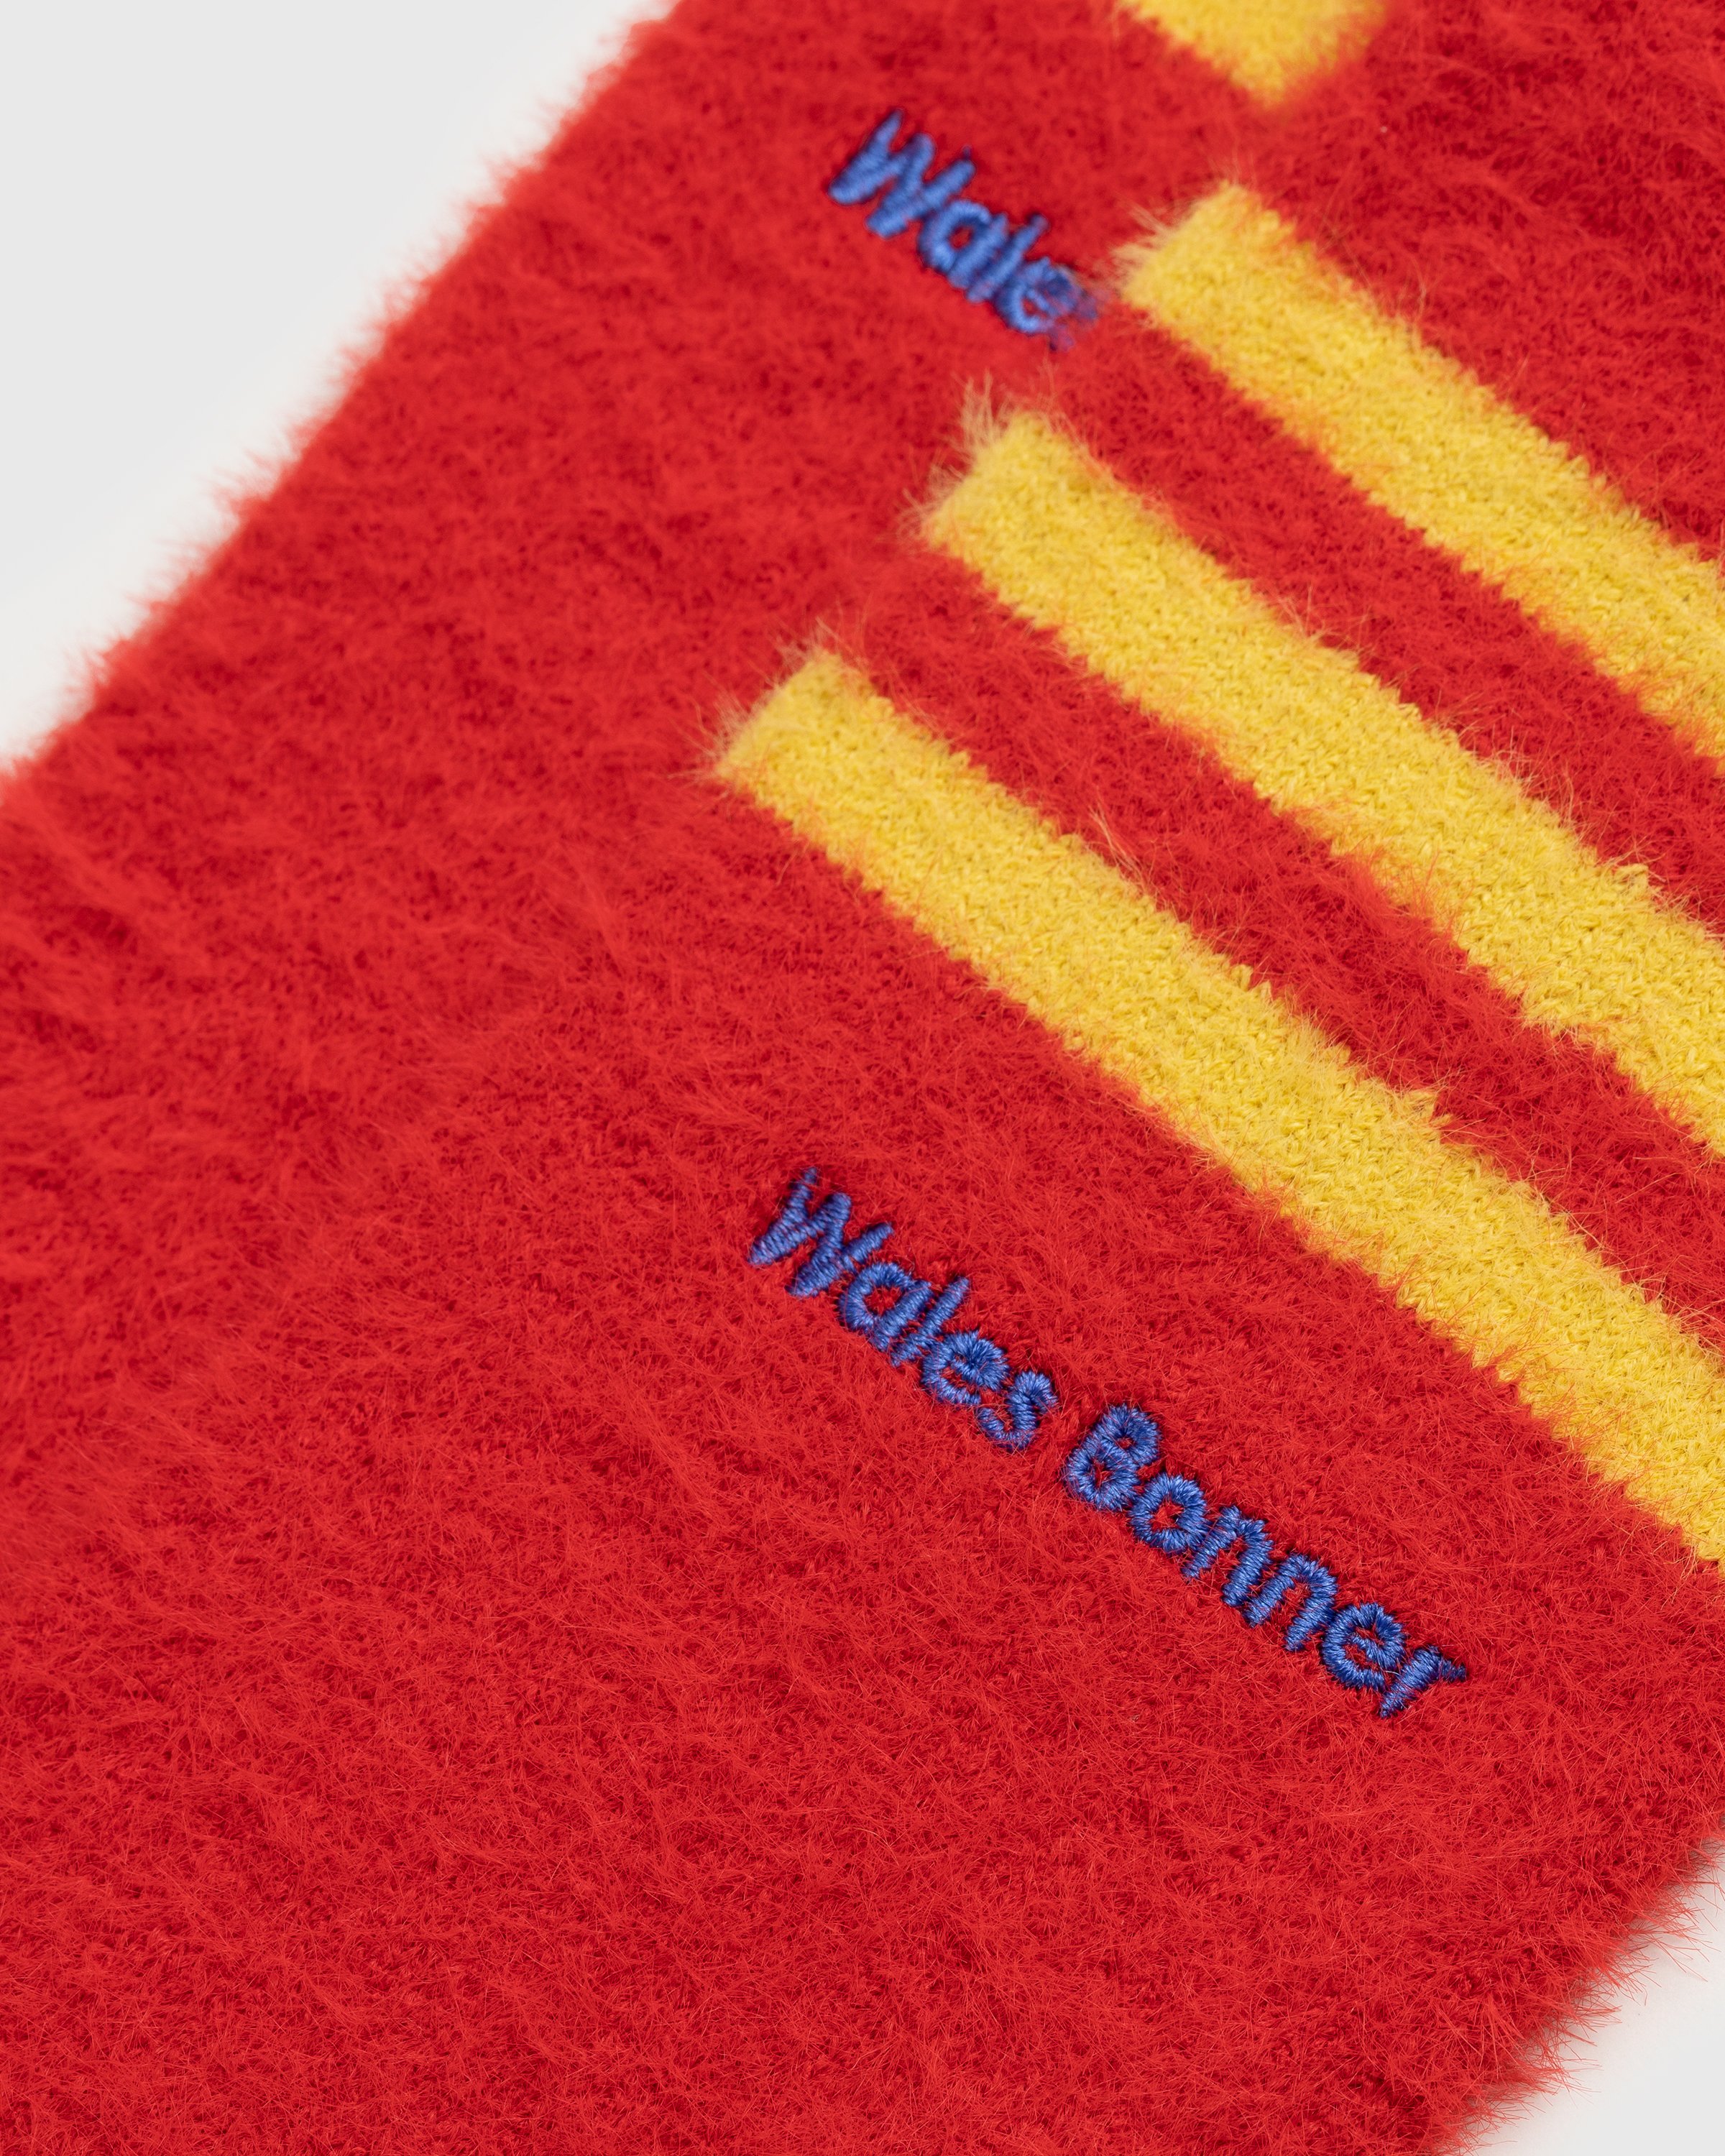 Adidas x Wales Bonner - WB Socks Scarlet/Mesa - Accessories - Yellow - Image 4